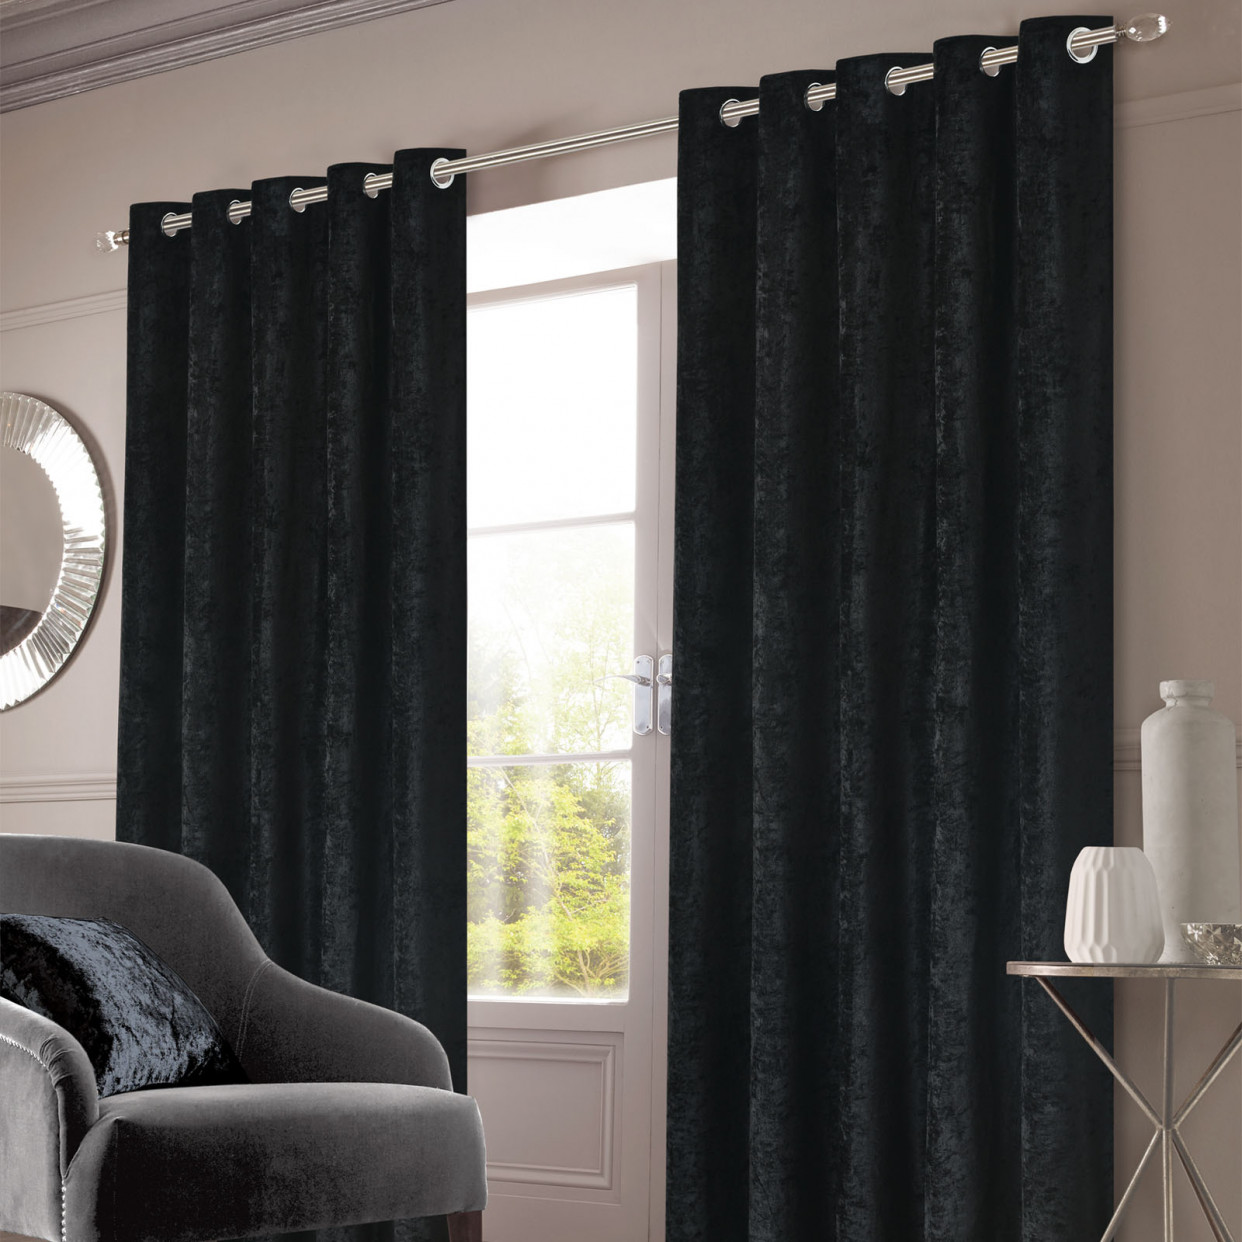 Sienna Home Crushed Velvet Eyelet Curtains - Black>